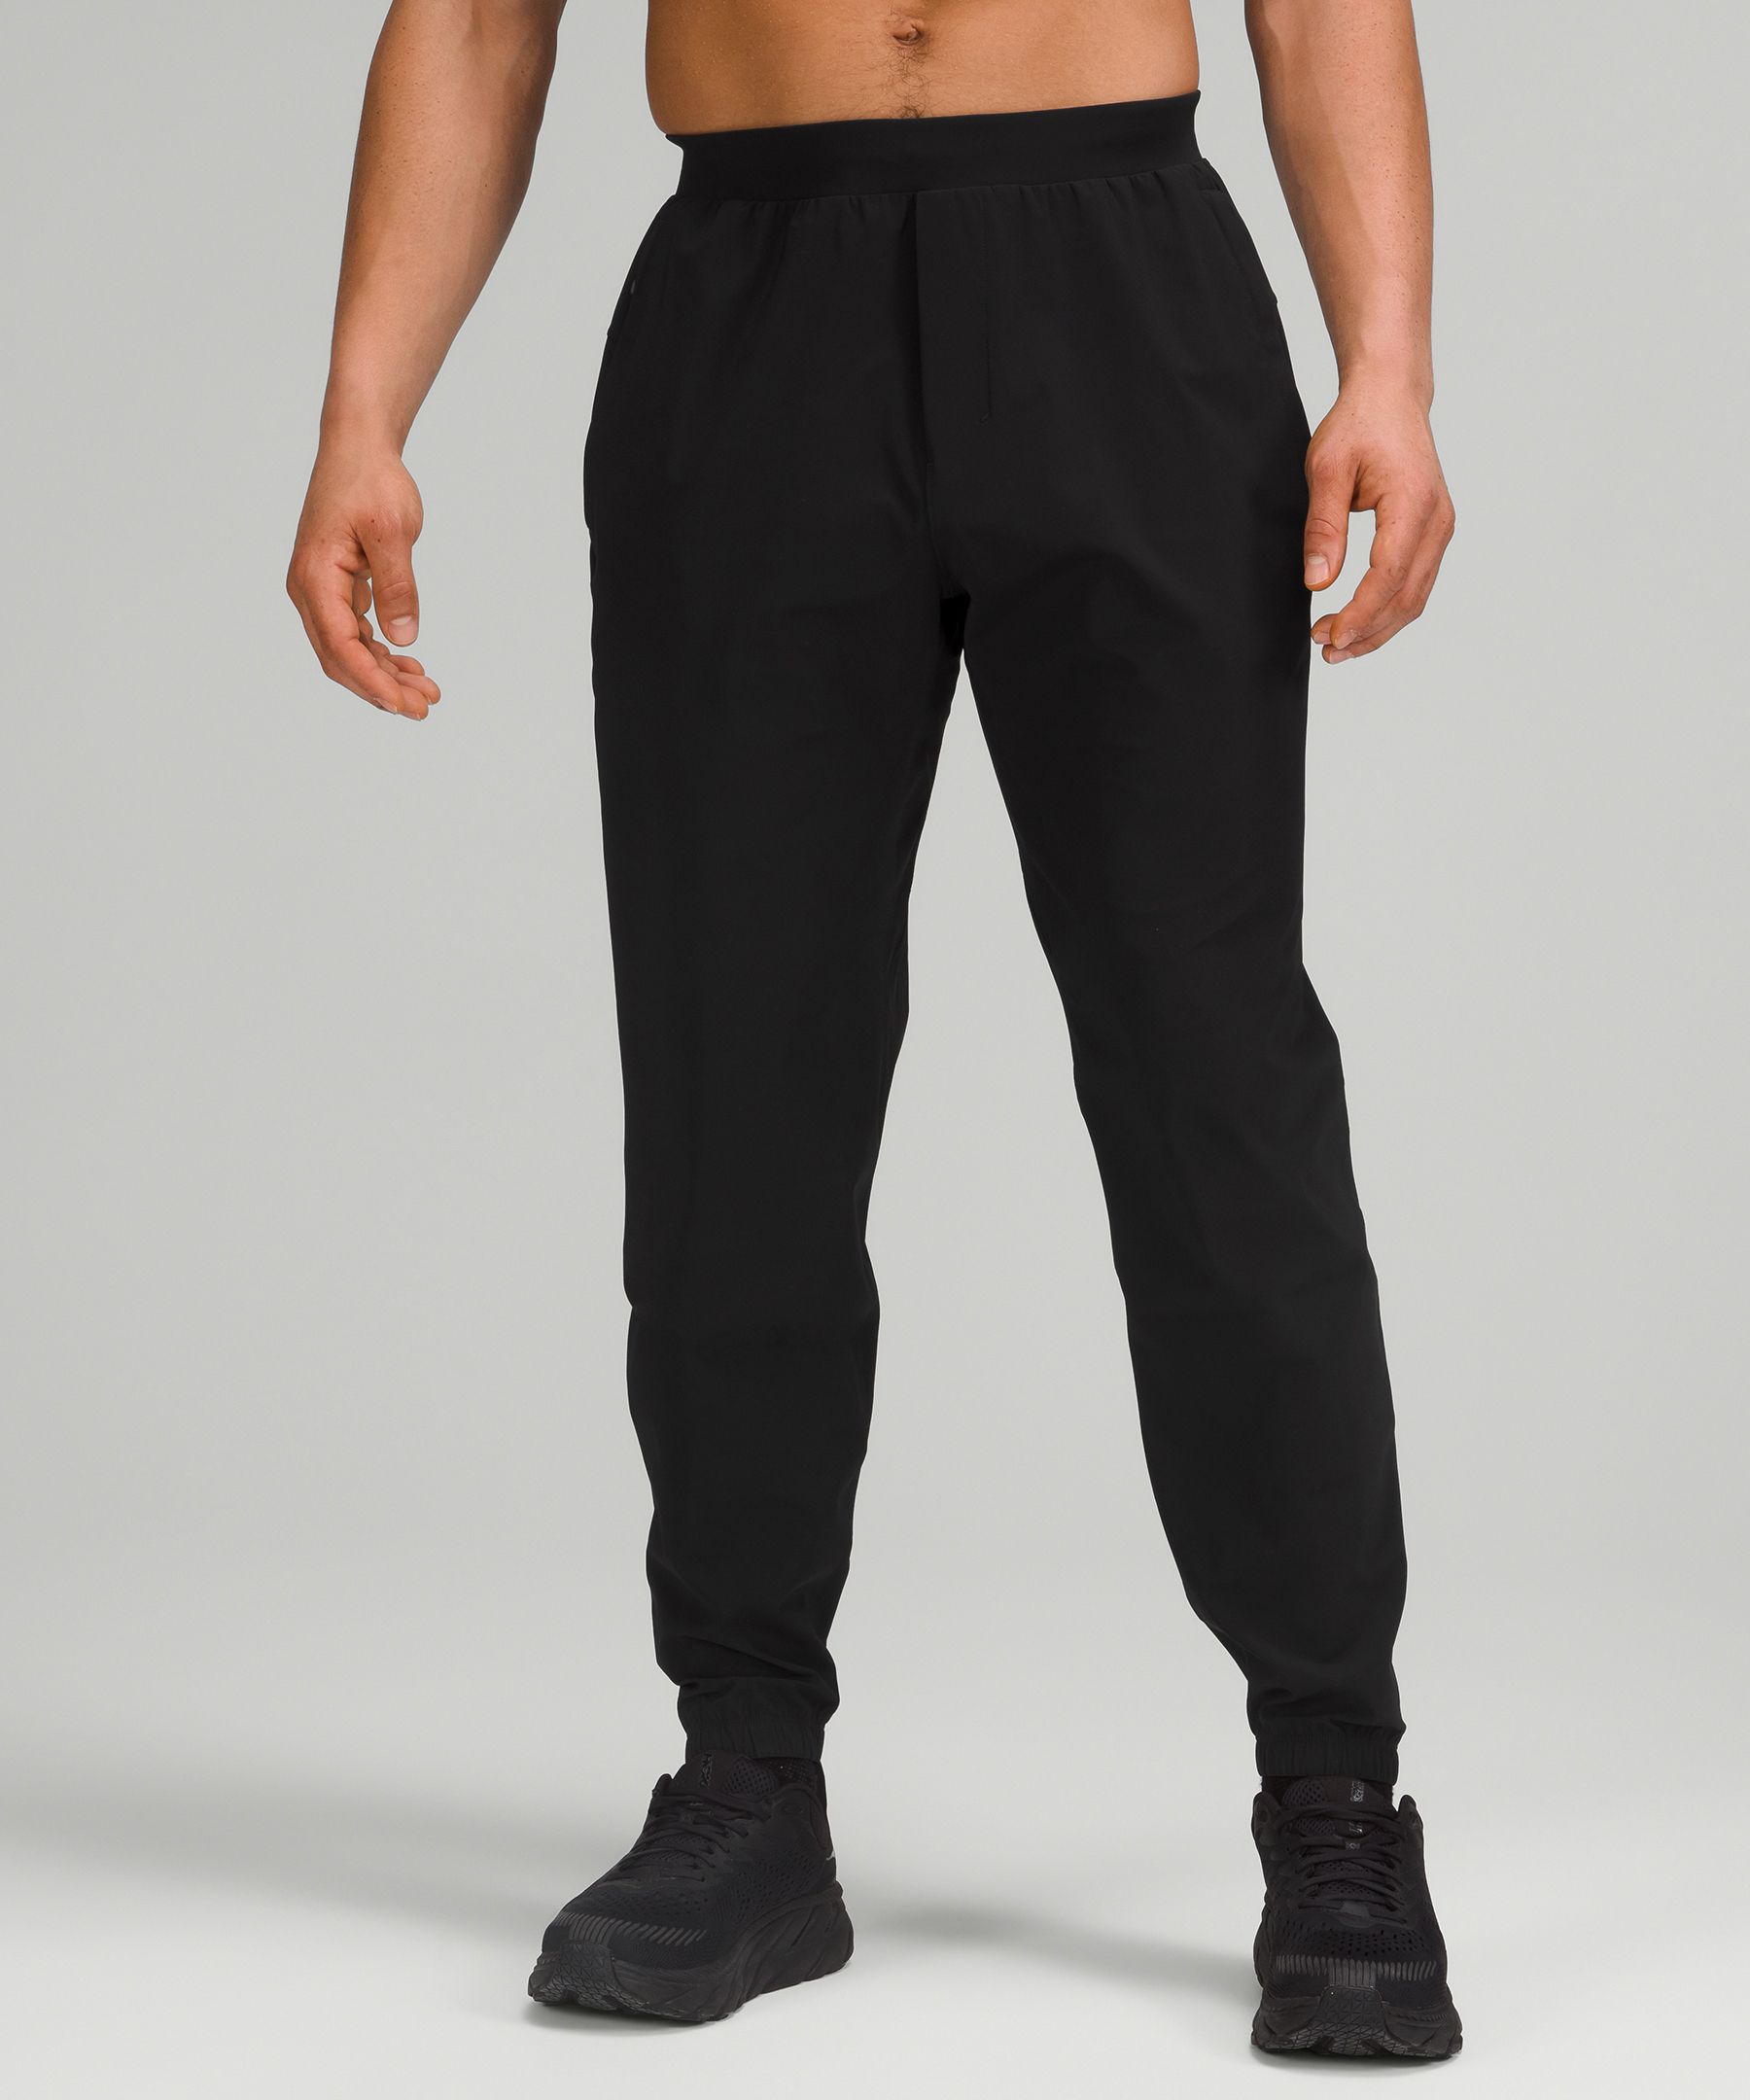 Lululemon Men's Black Activewear Pants